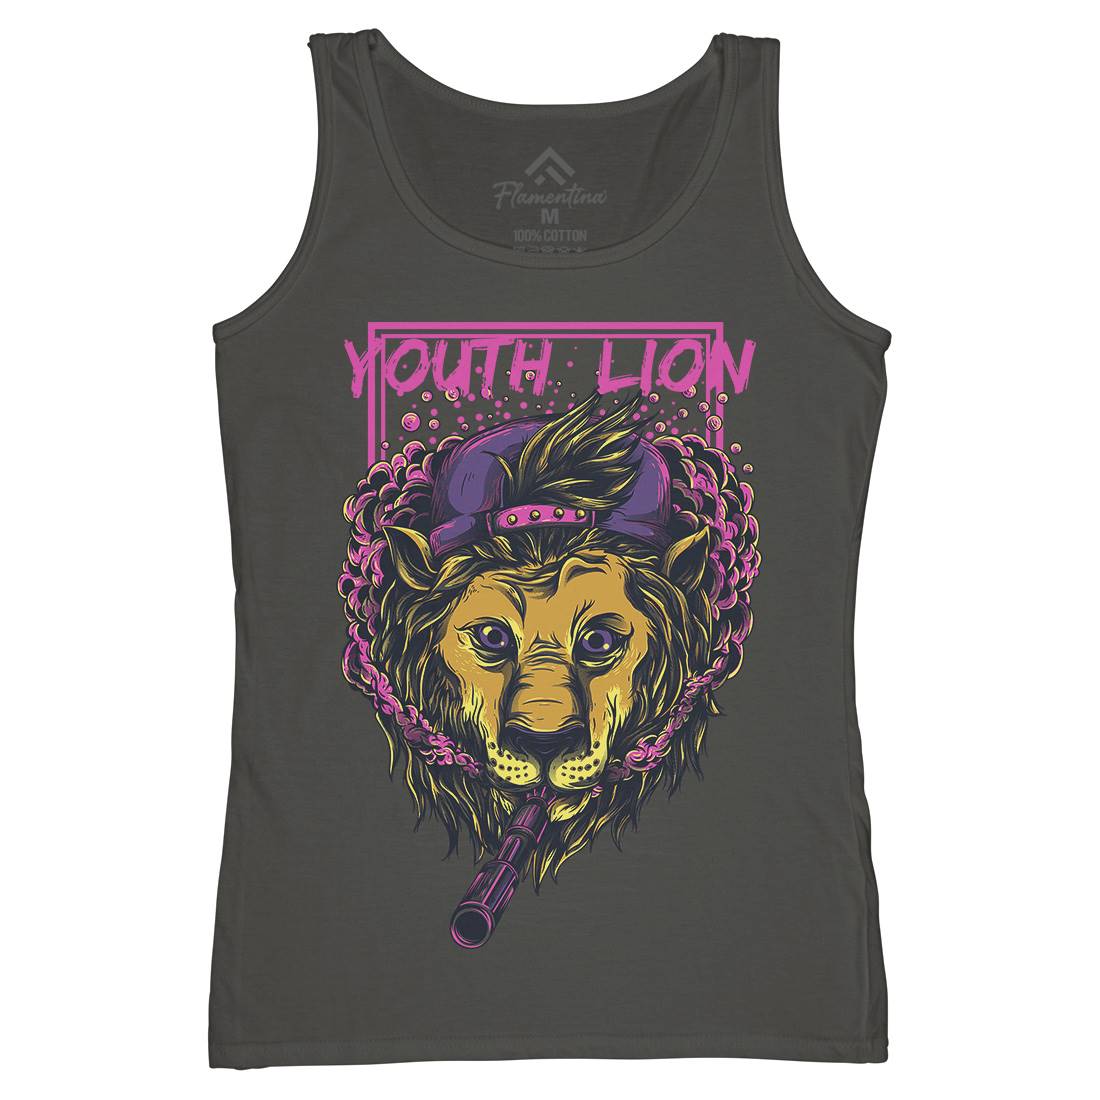 Youth Lion Womens Organic Tank Top Vest Animals D893